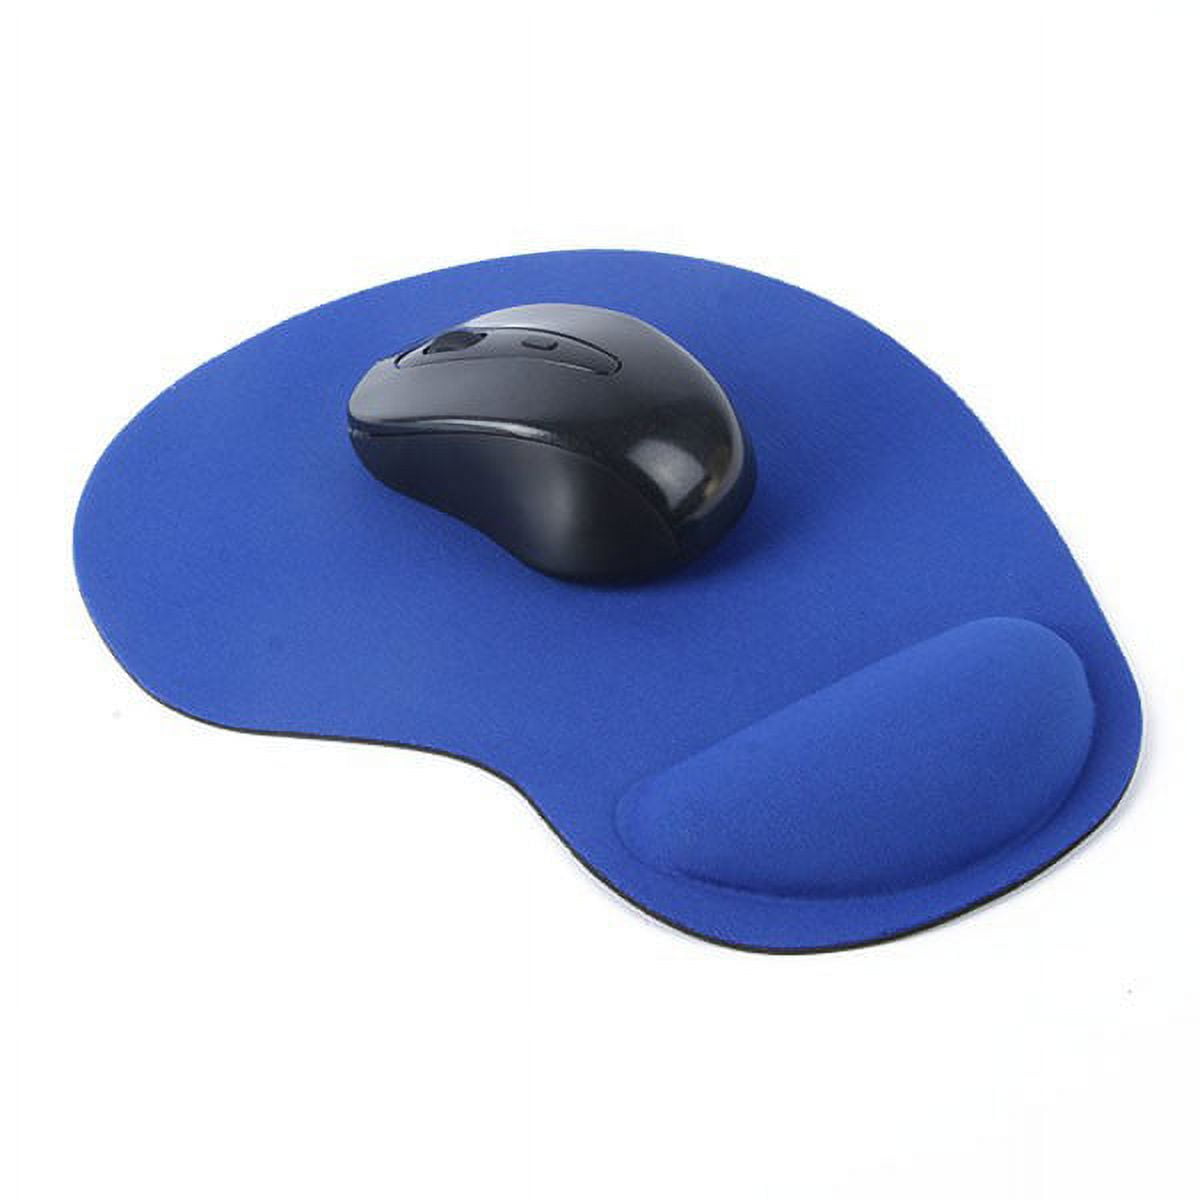 Custom Imprinted Memory Foam Mousepad